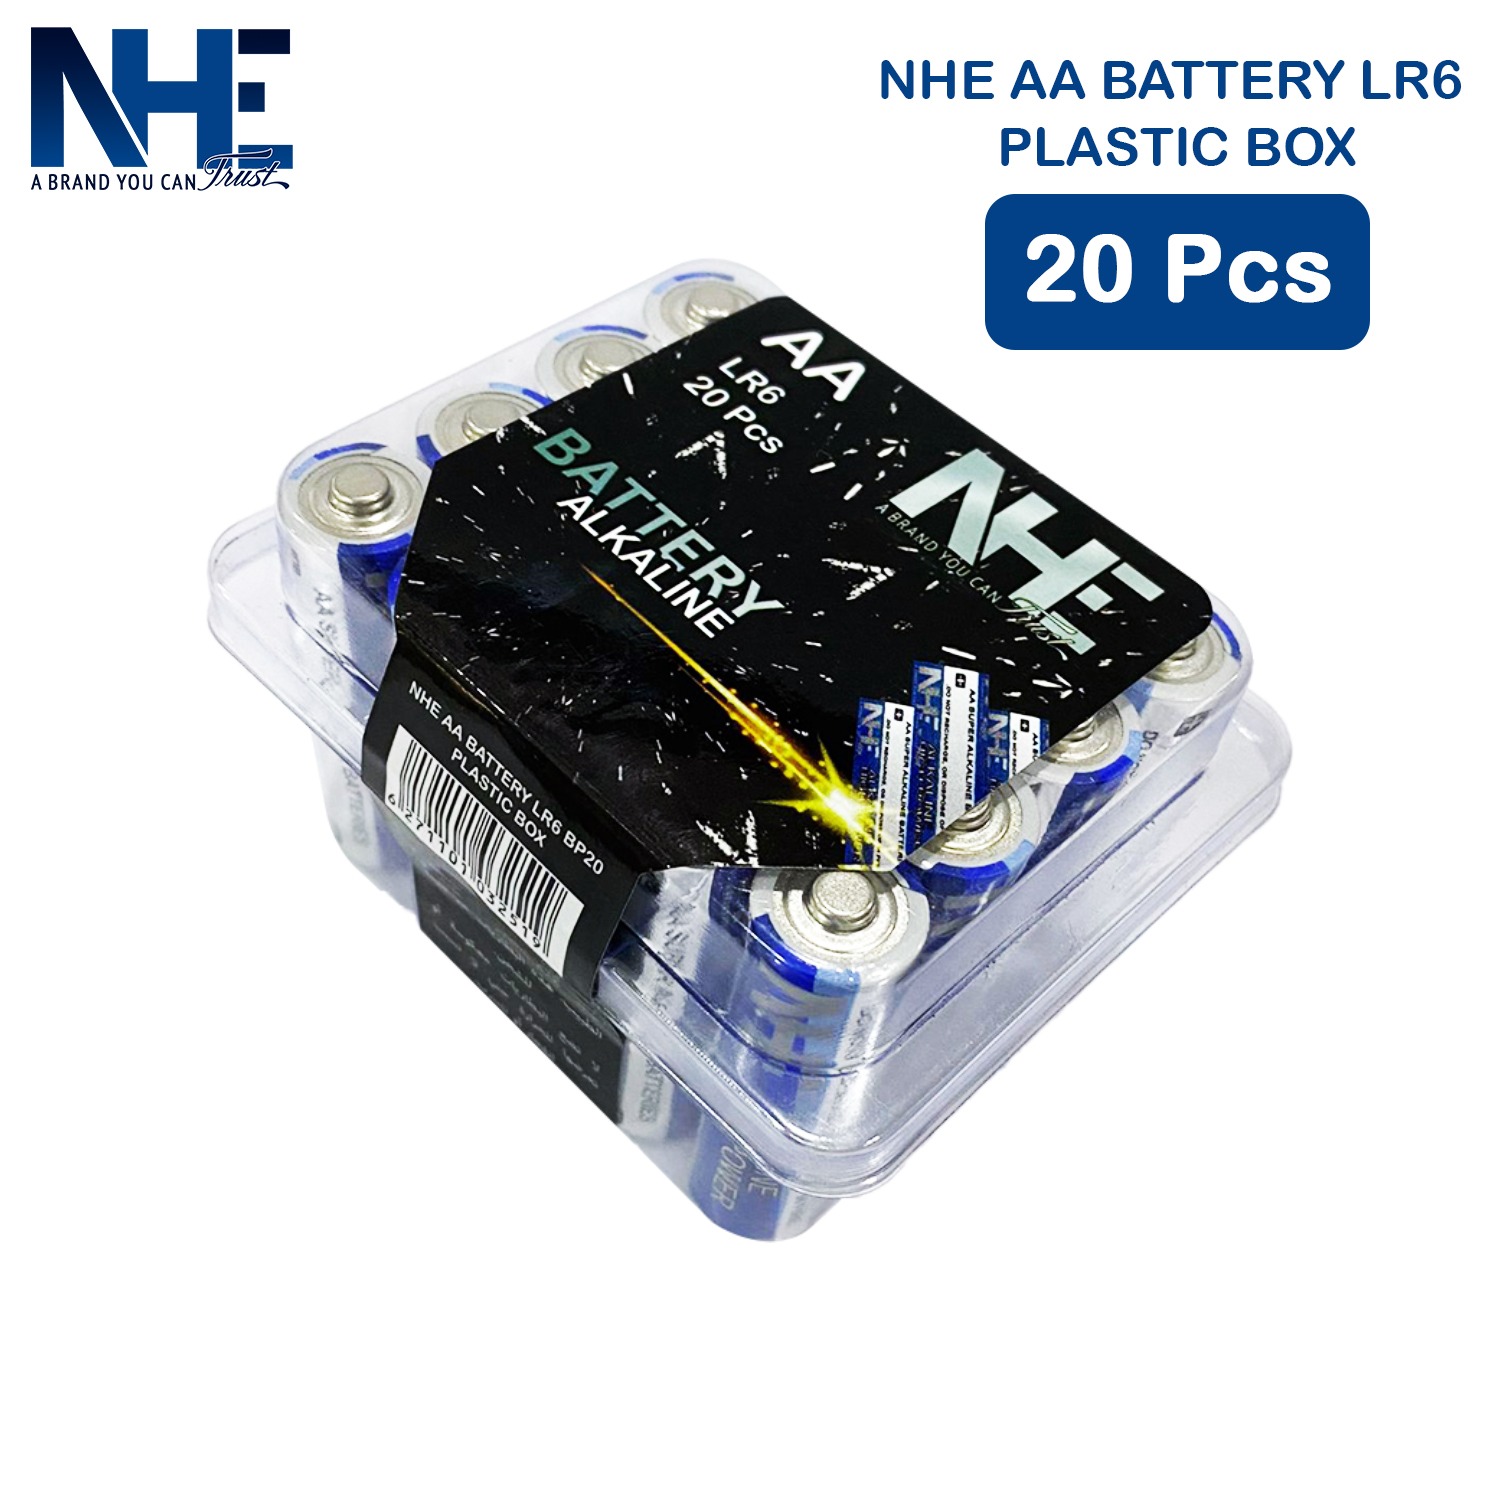 NHE AA Battery LR6 BP20 Plastic Box